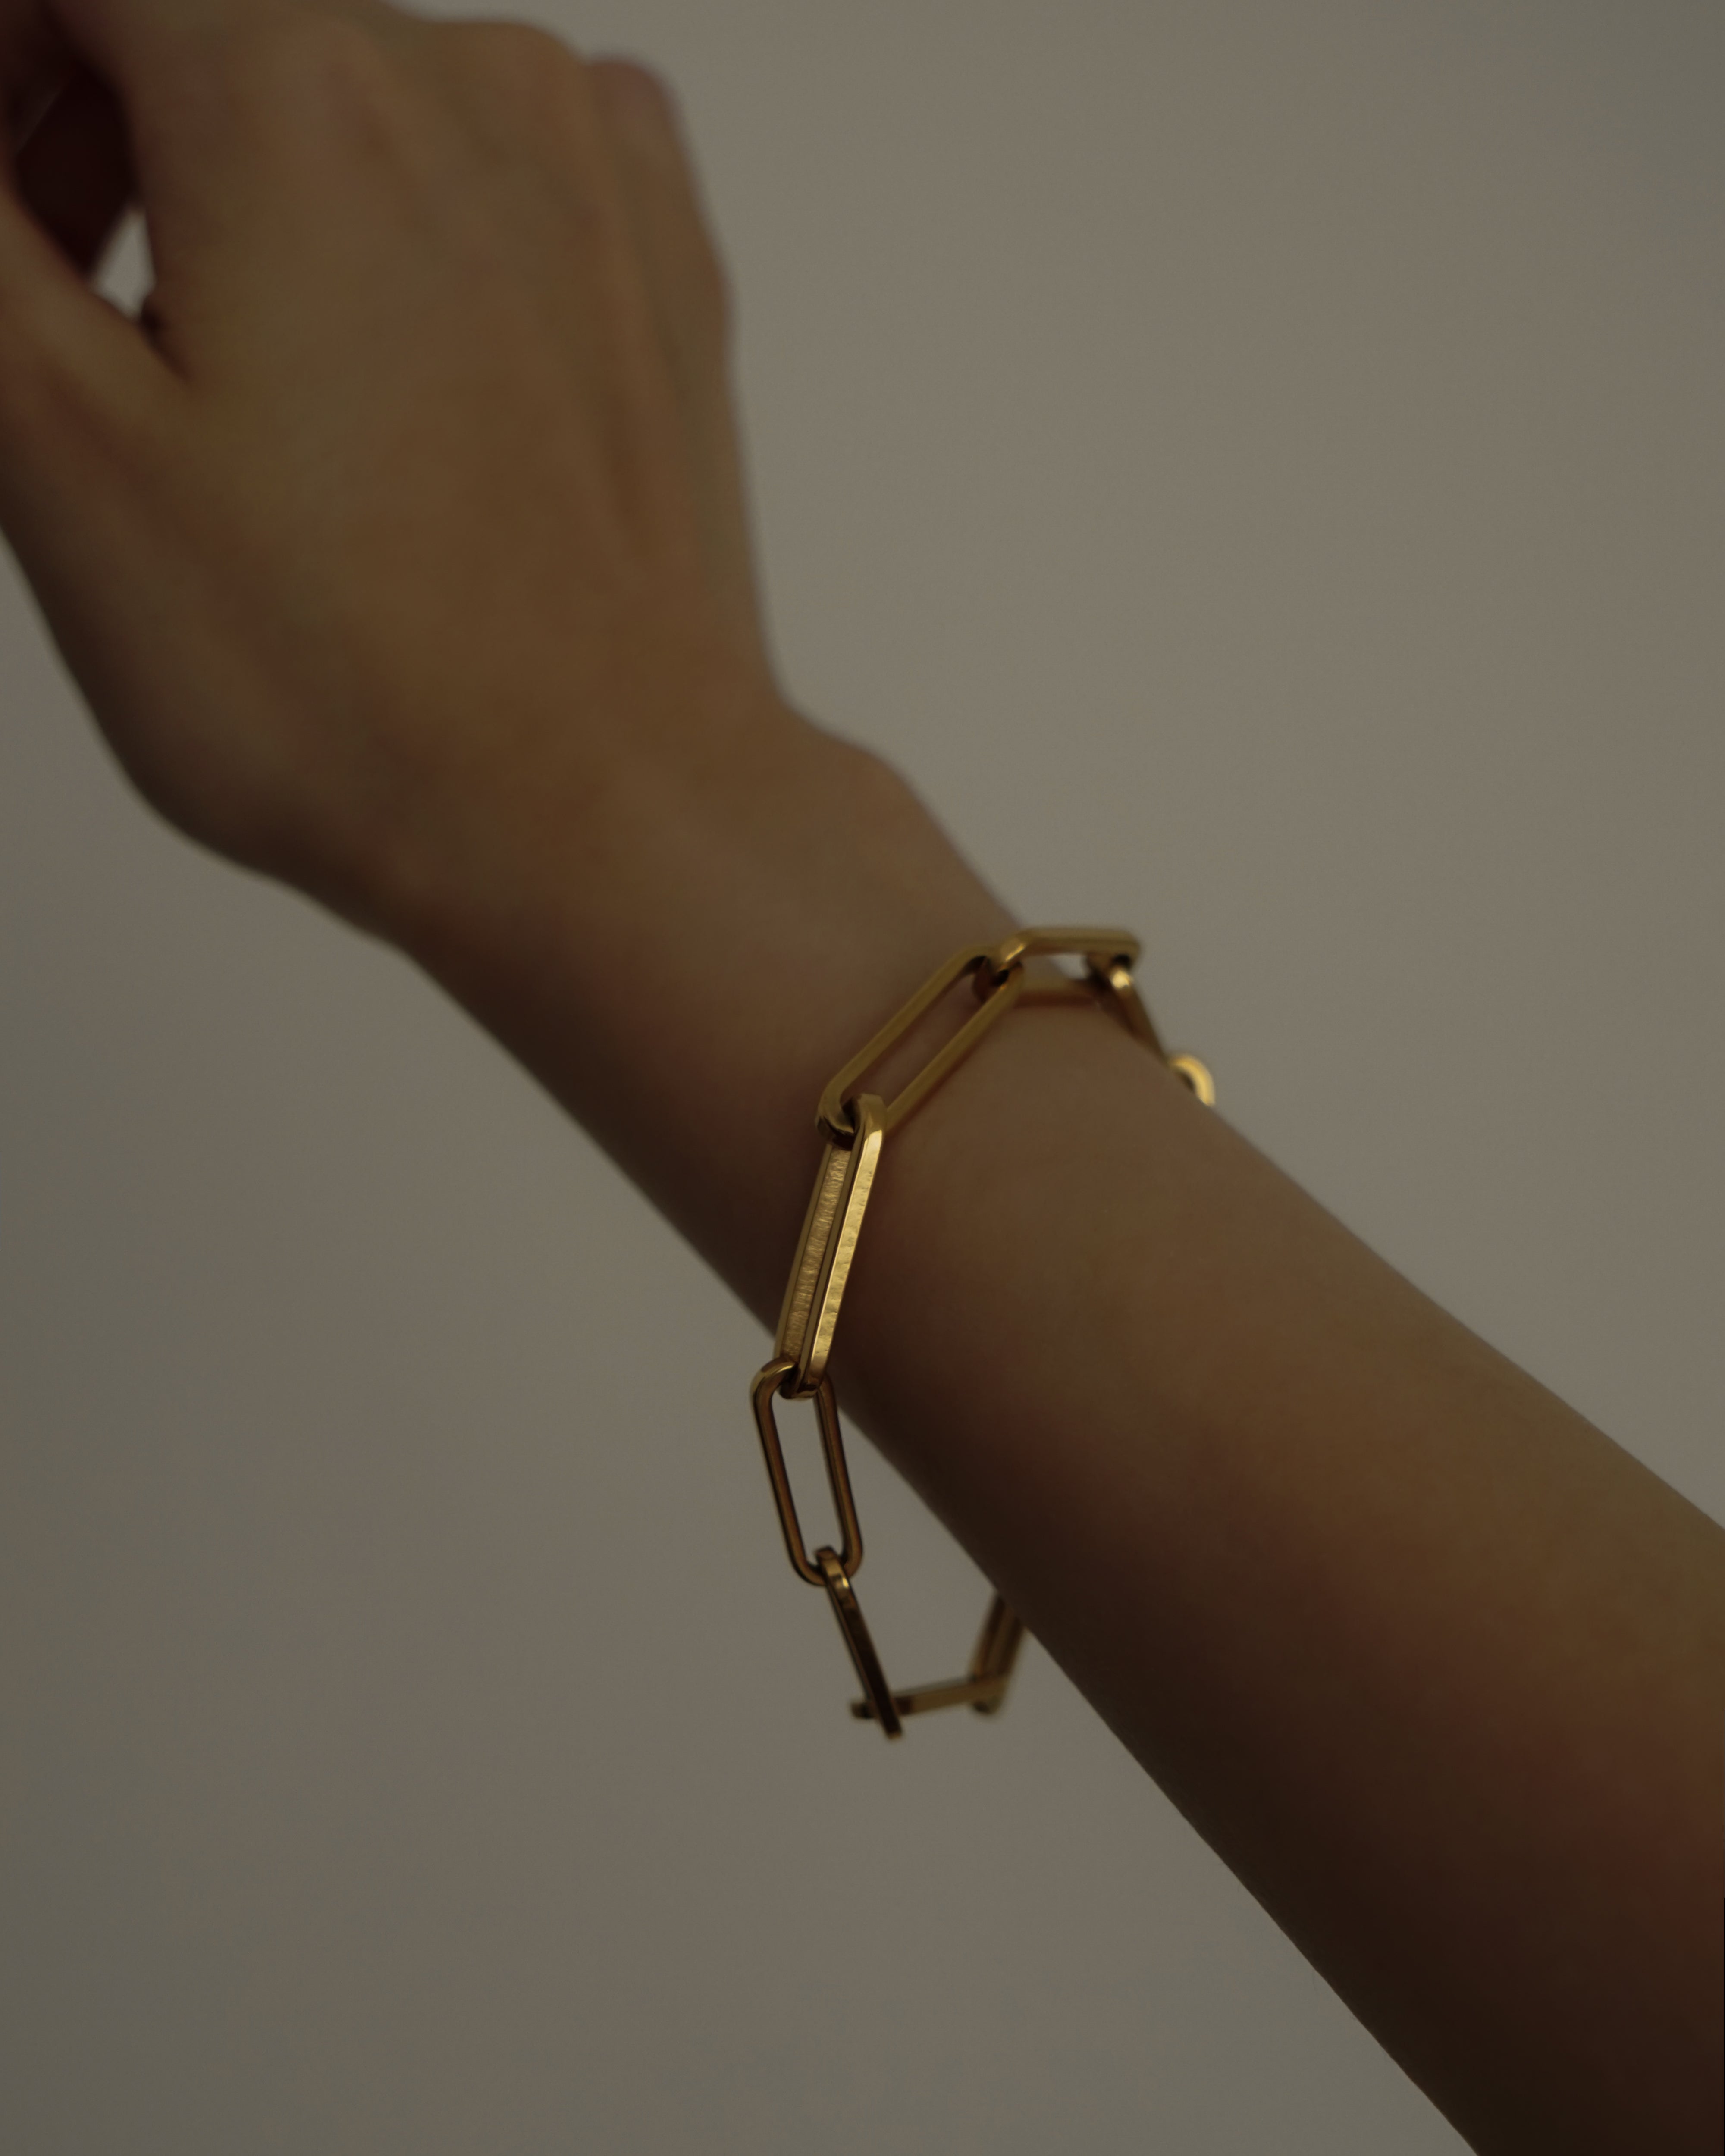 Lita Bold Chain Link Bracelet